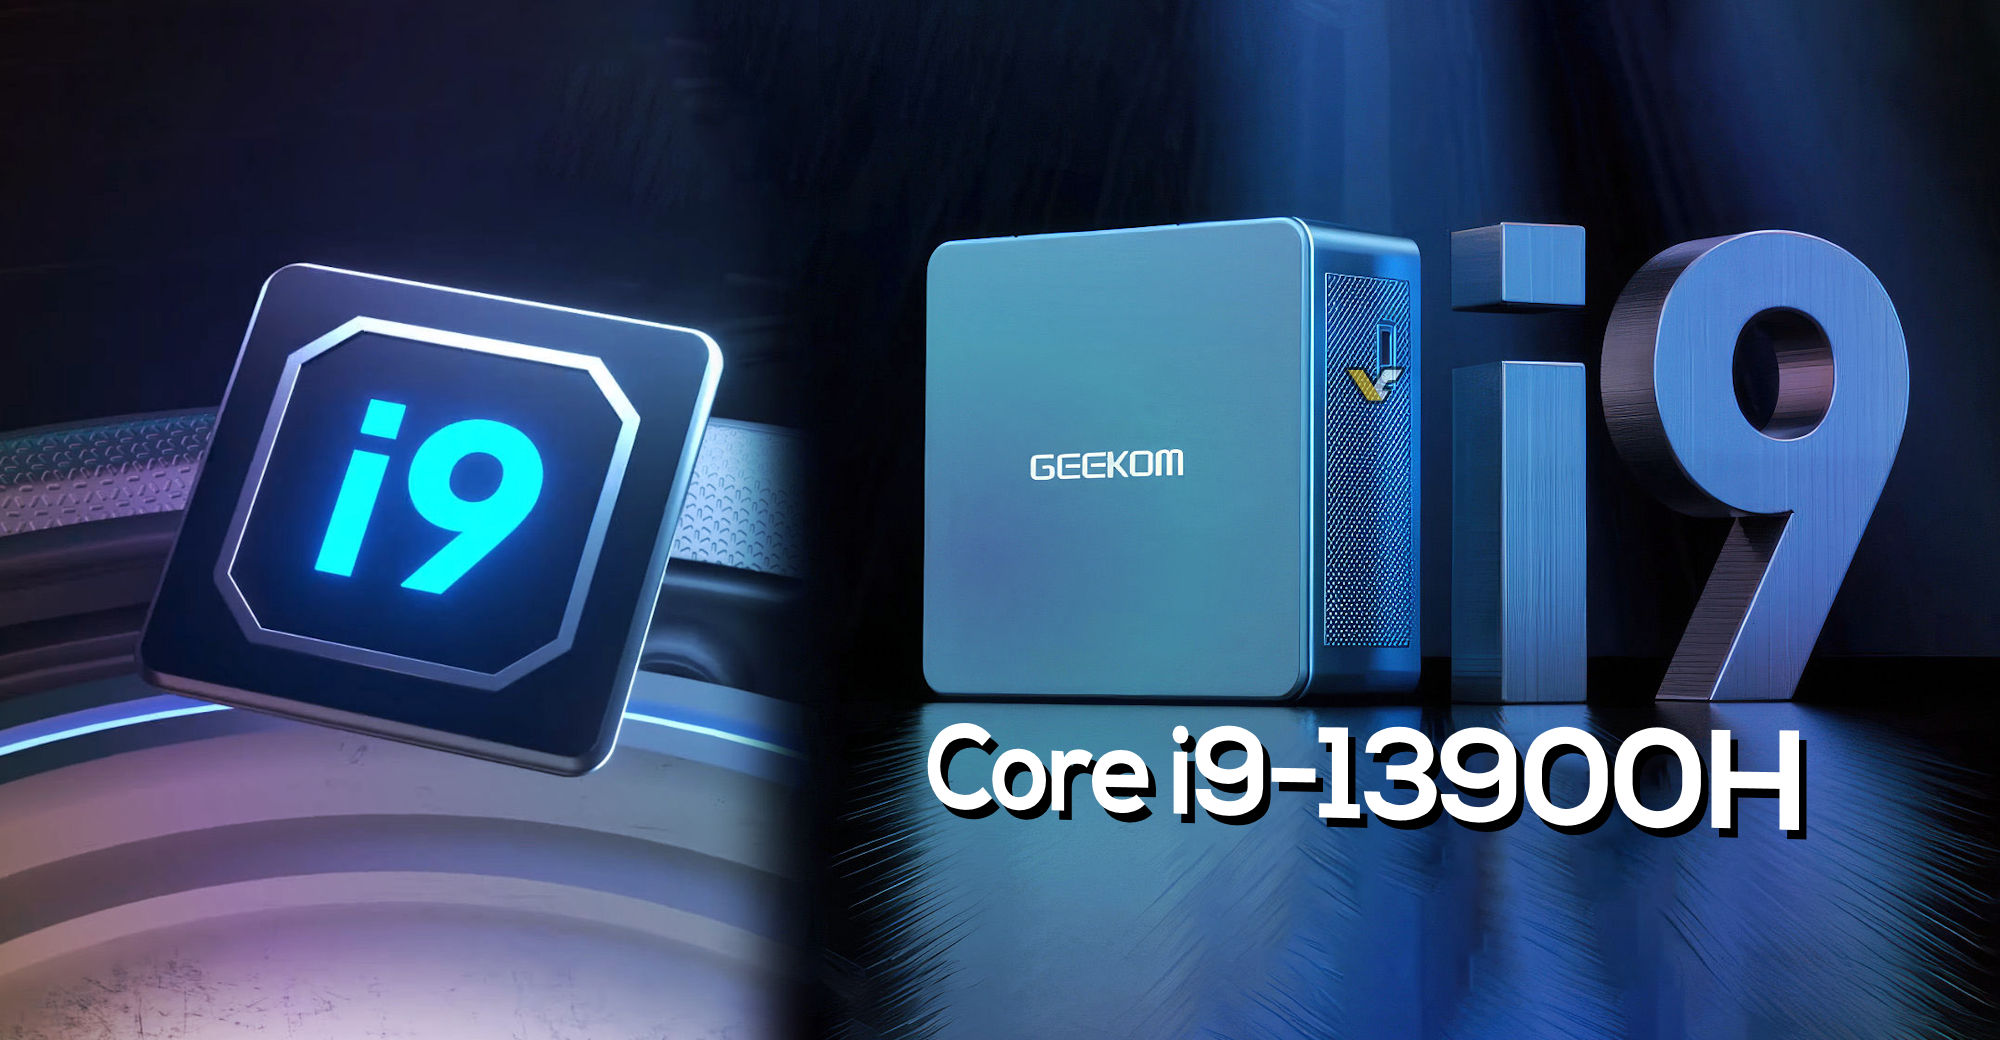 Geekom Mini IT13 Mini PC (Core i9 13900H) review (Page 3)